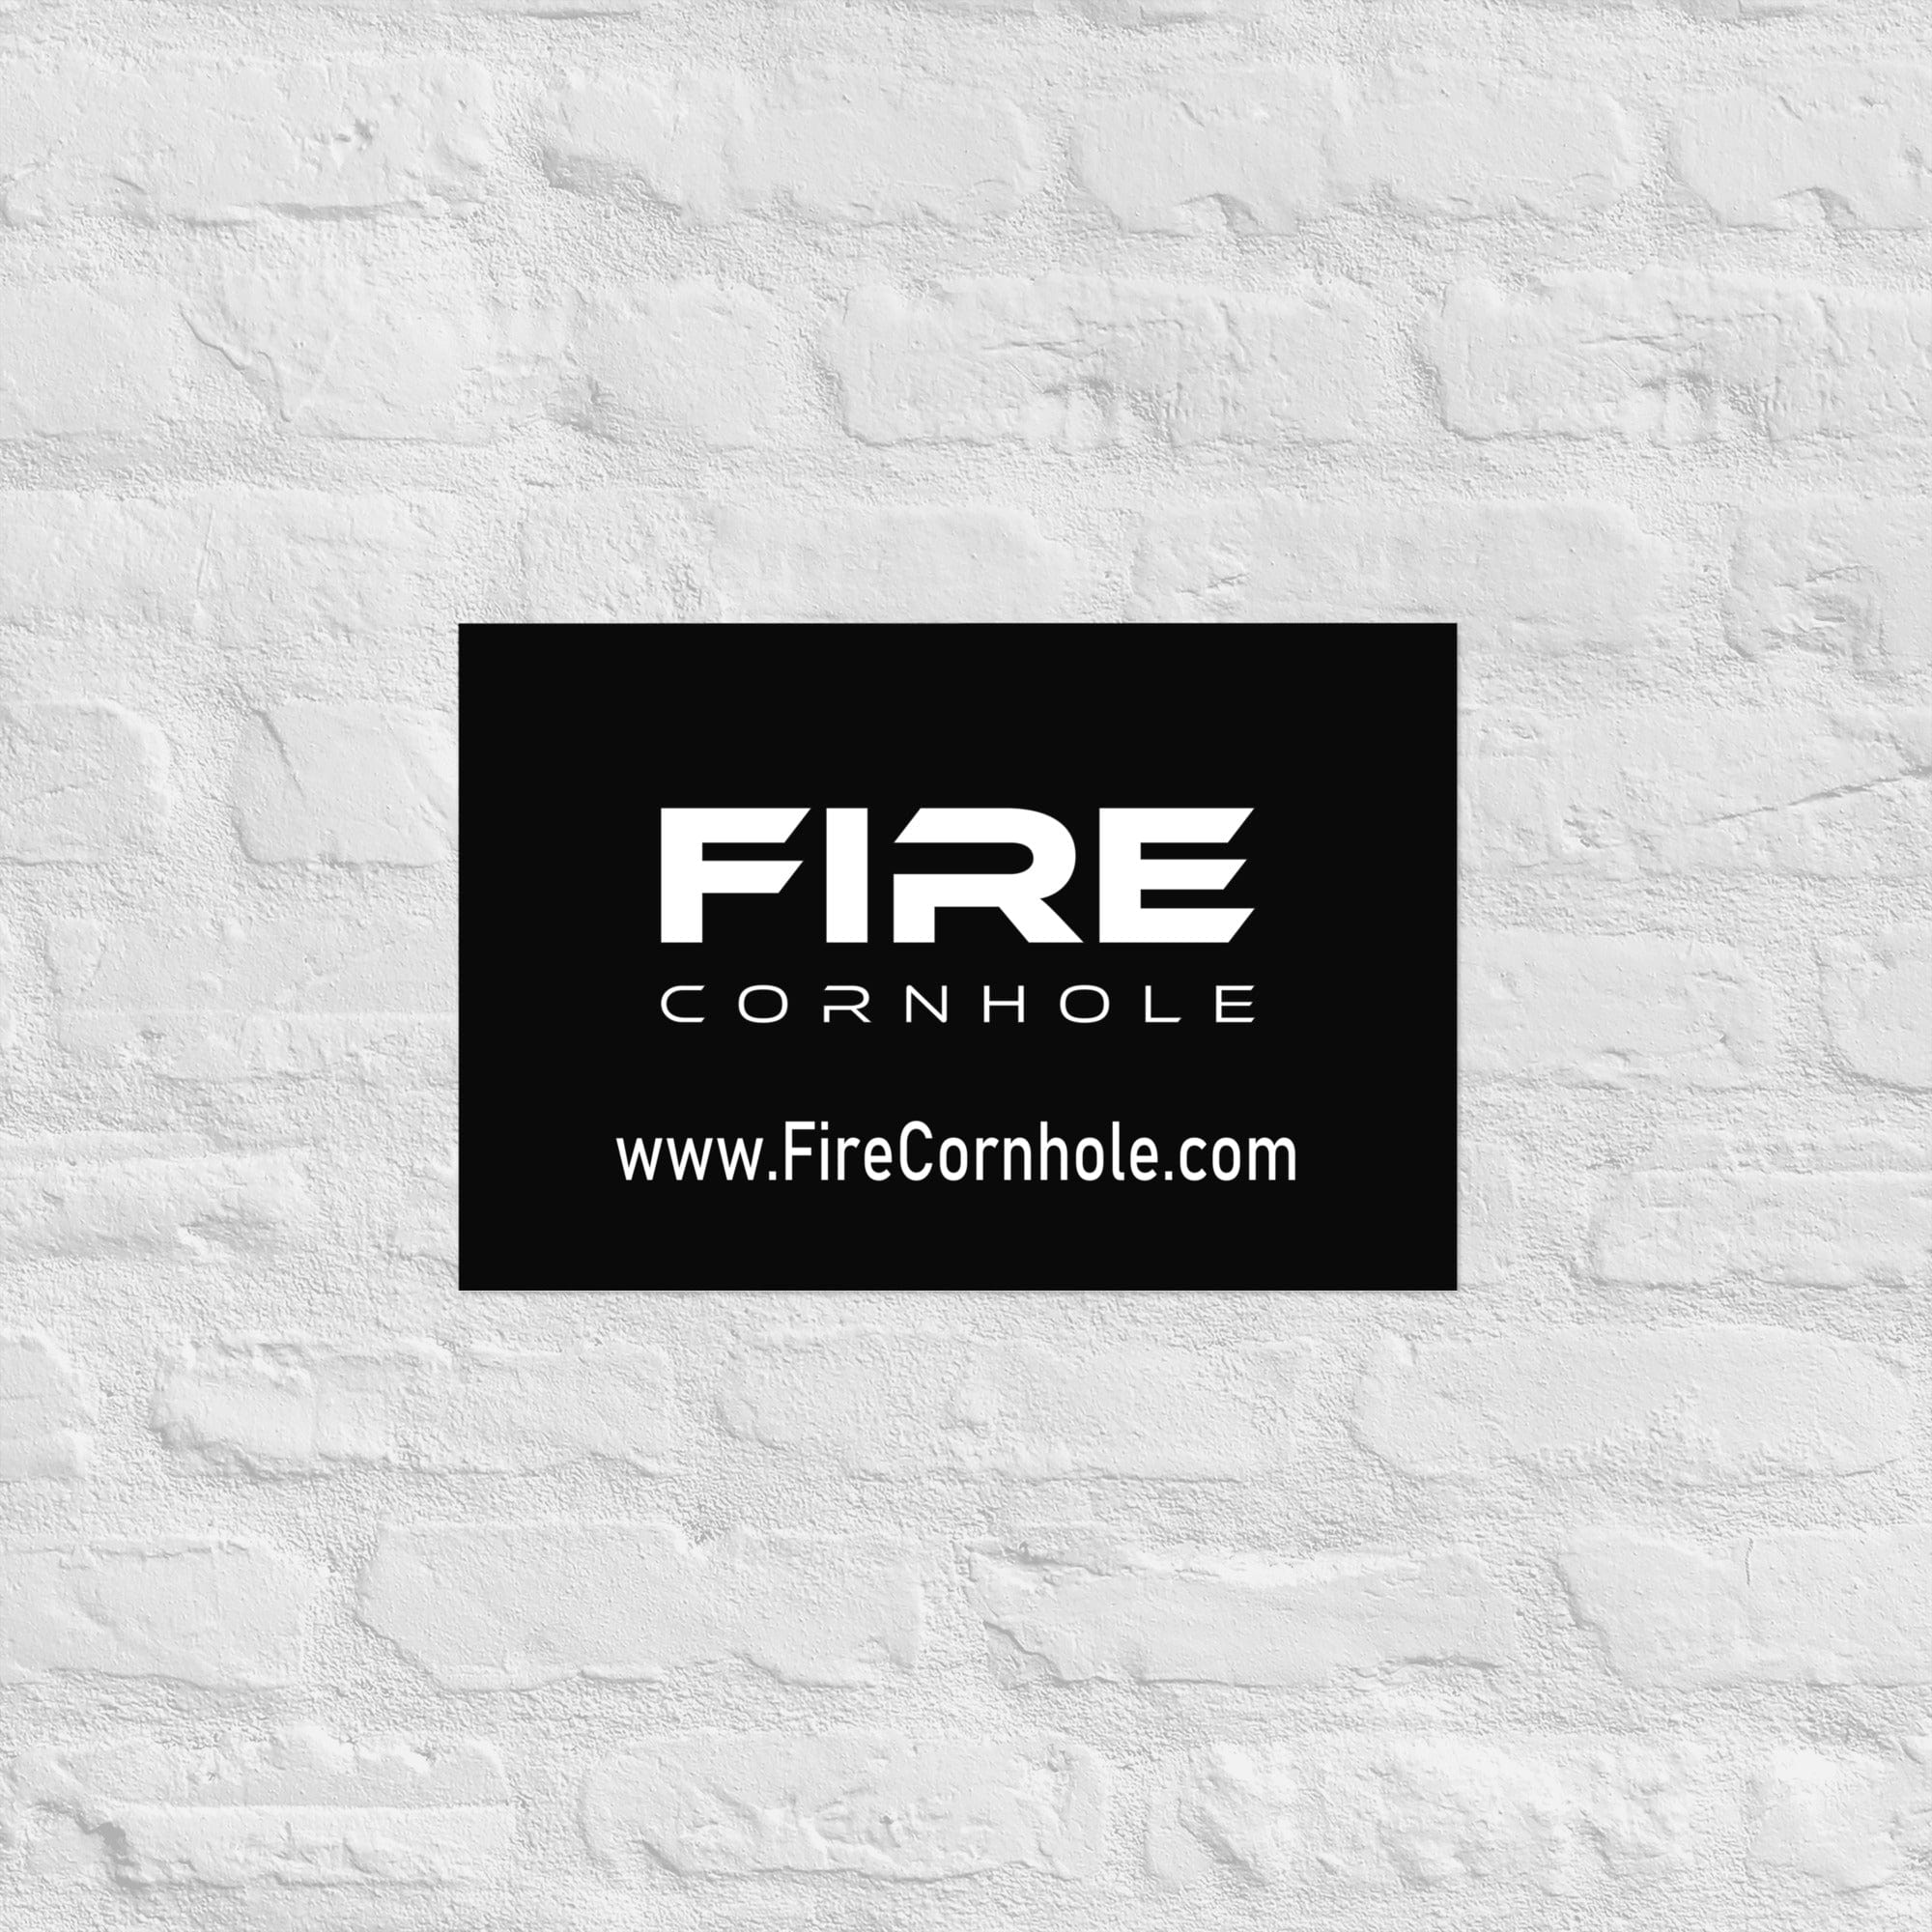 Fire Cornhole Fire Cornhole Poster